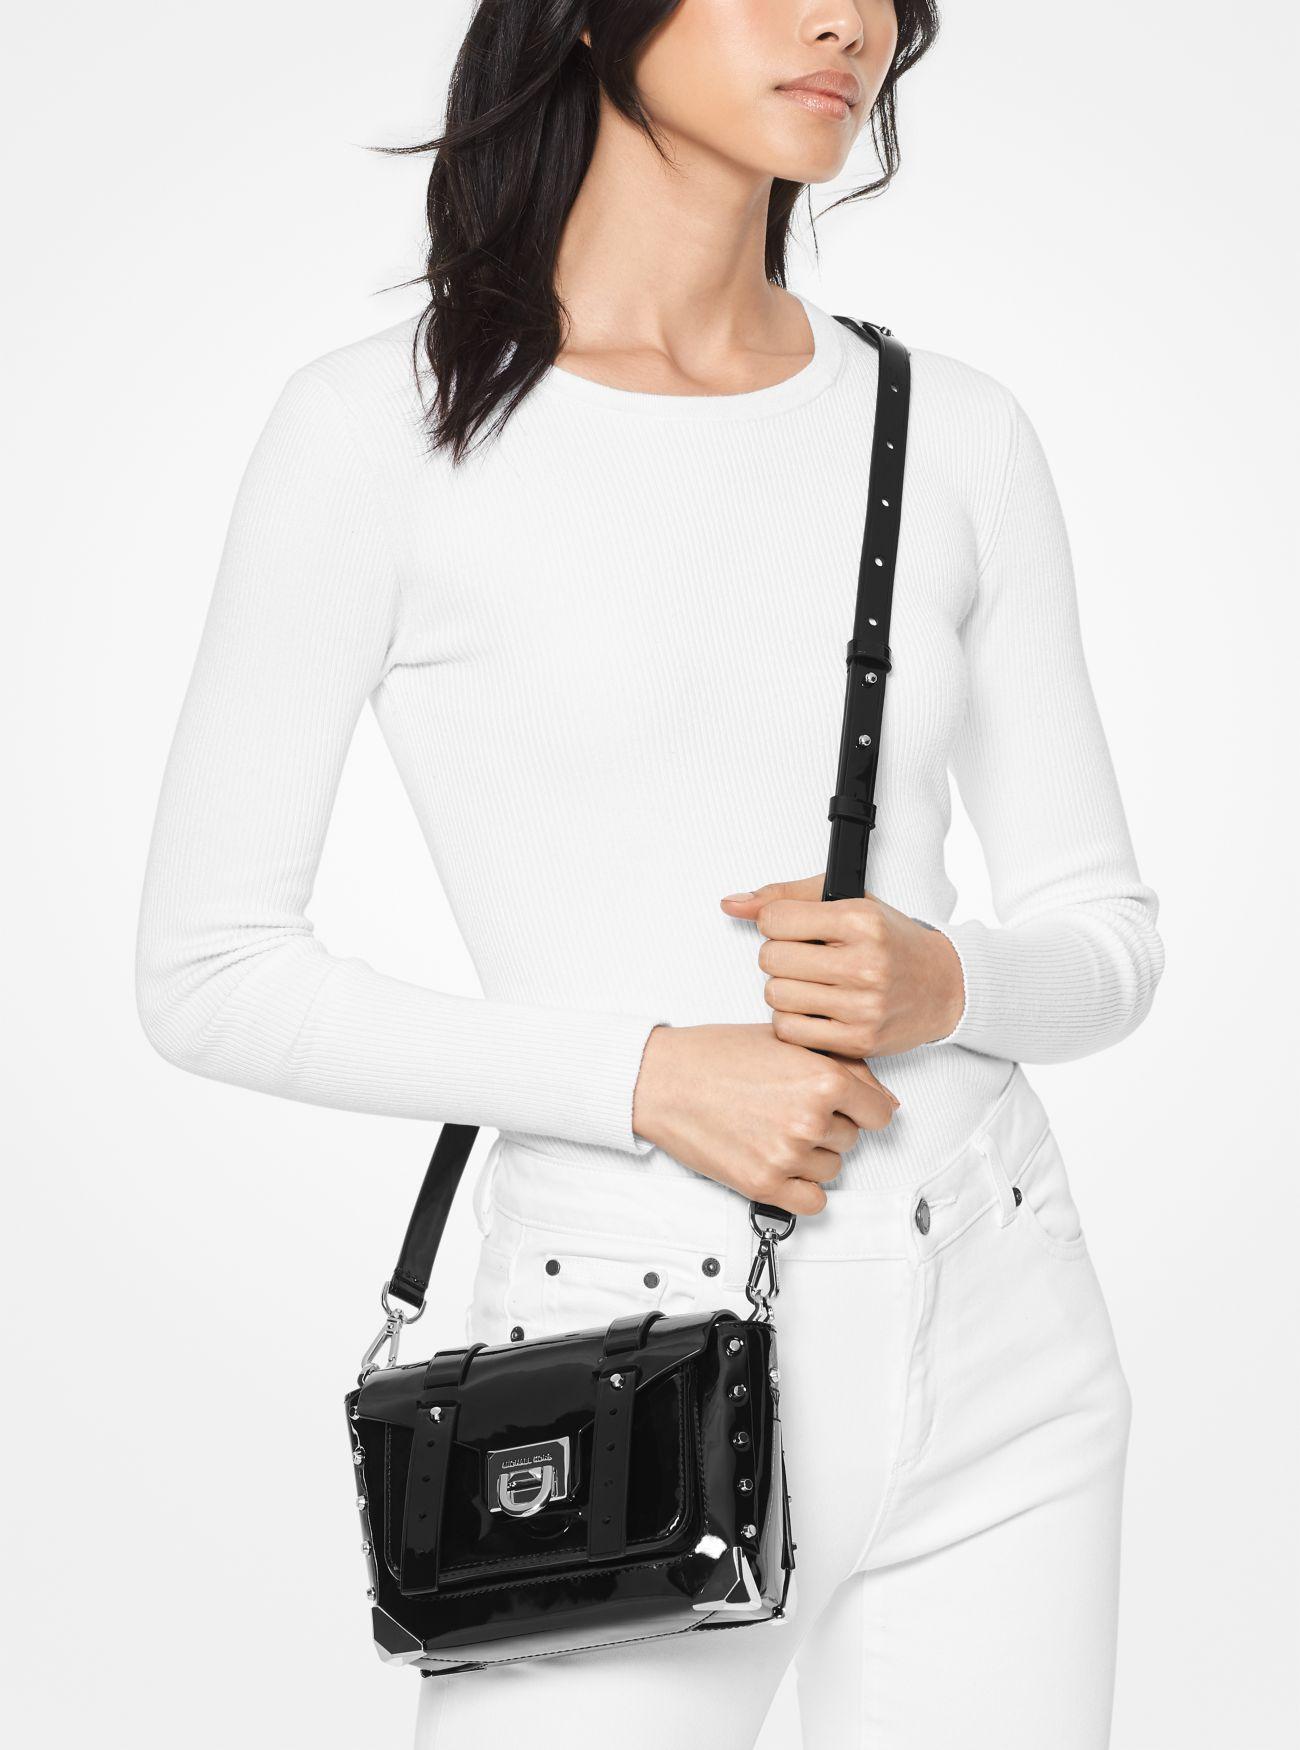 Michael Kors Mk Manhattan Small Patent Leather Crossbody Bag in Black | Lyst